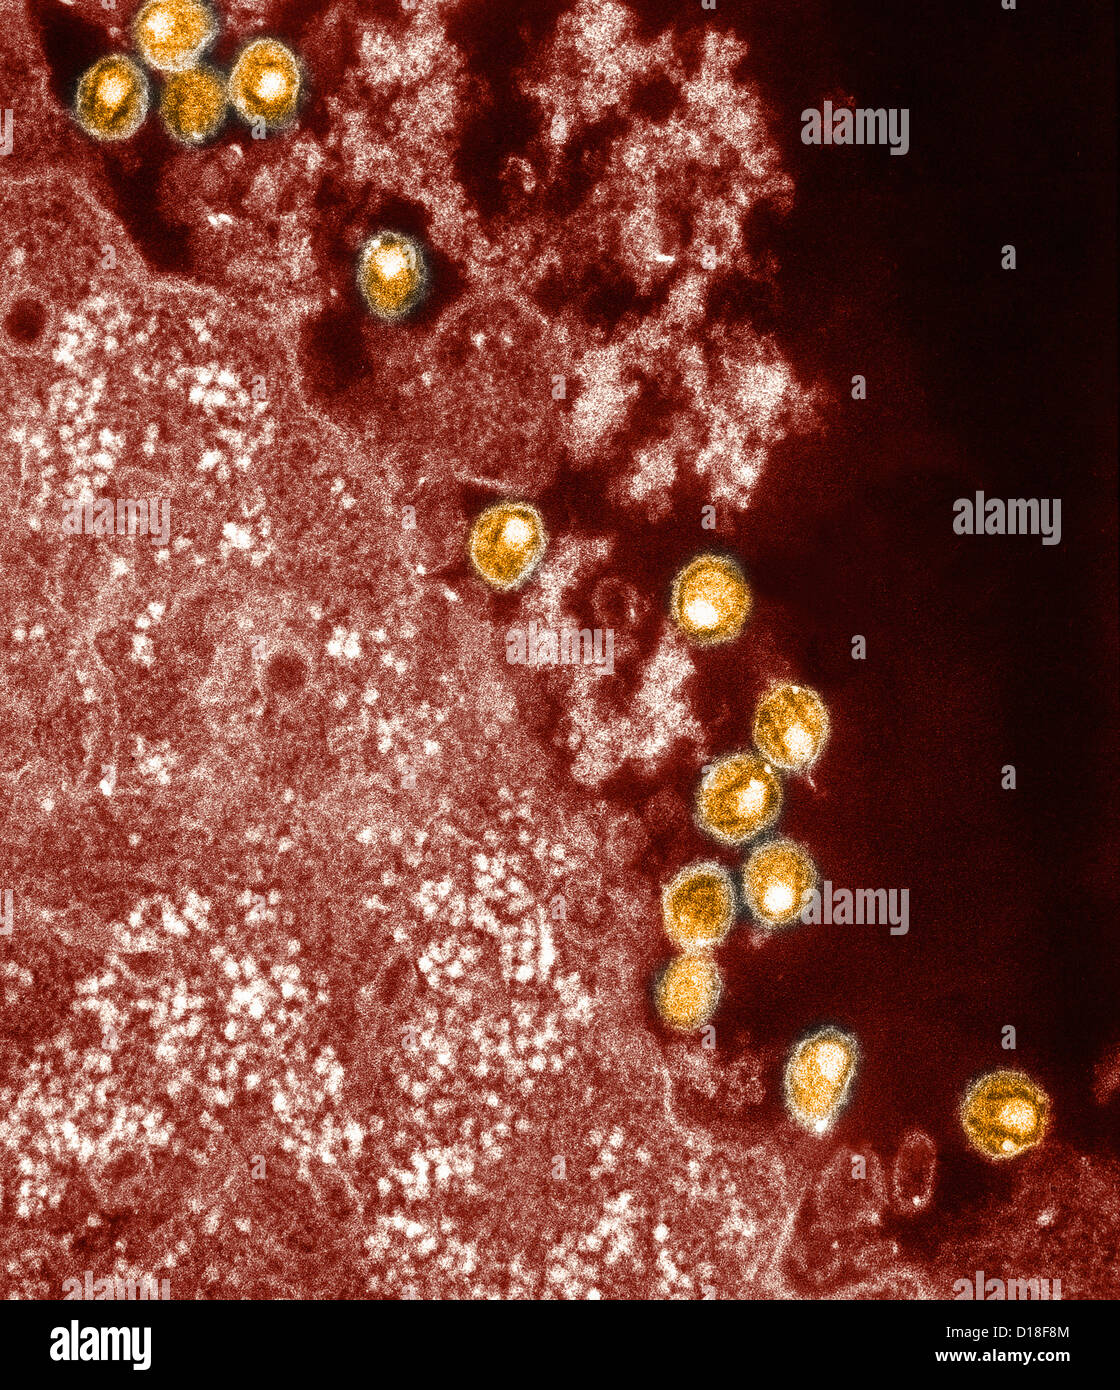 Electron micrograph of HIV virus Stock Photo